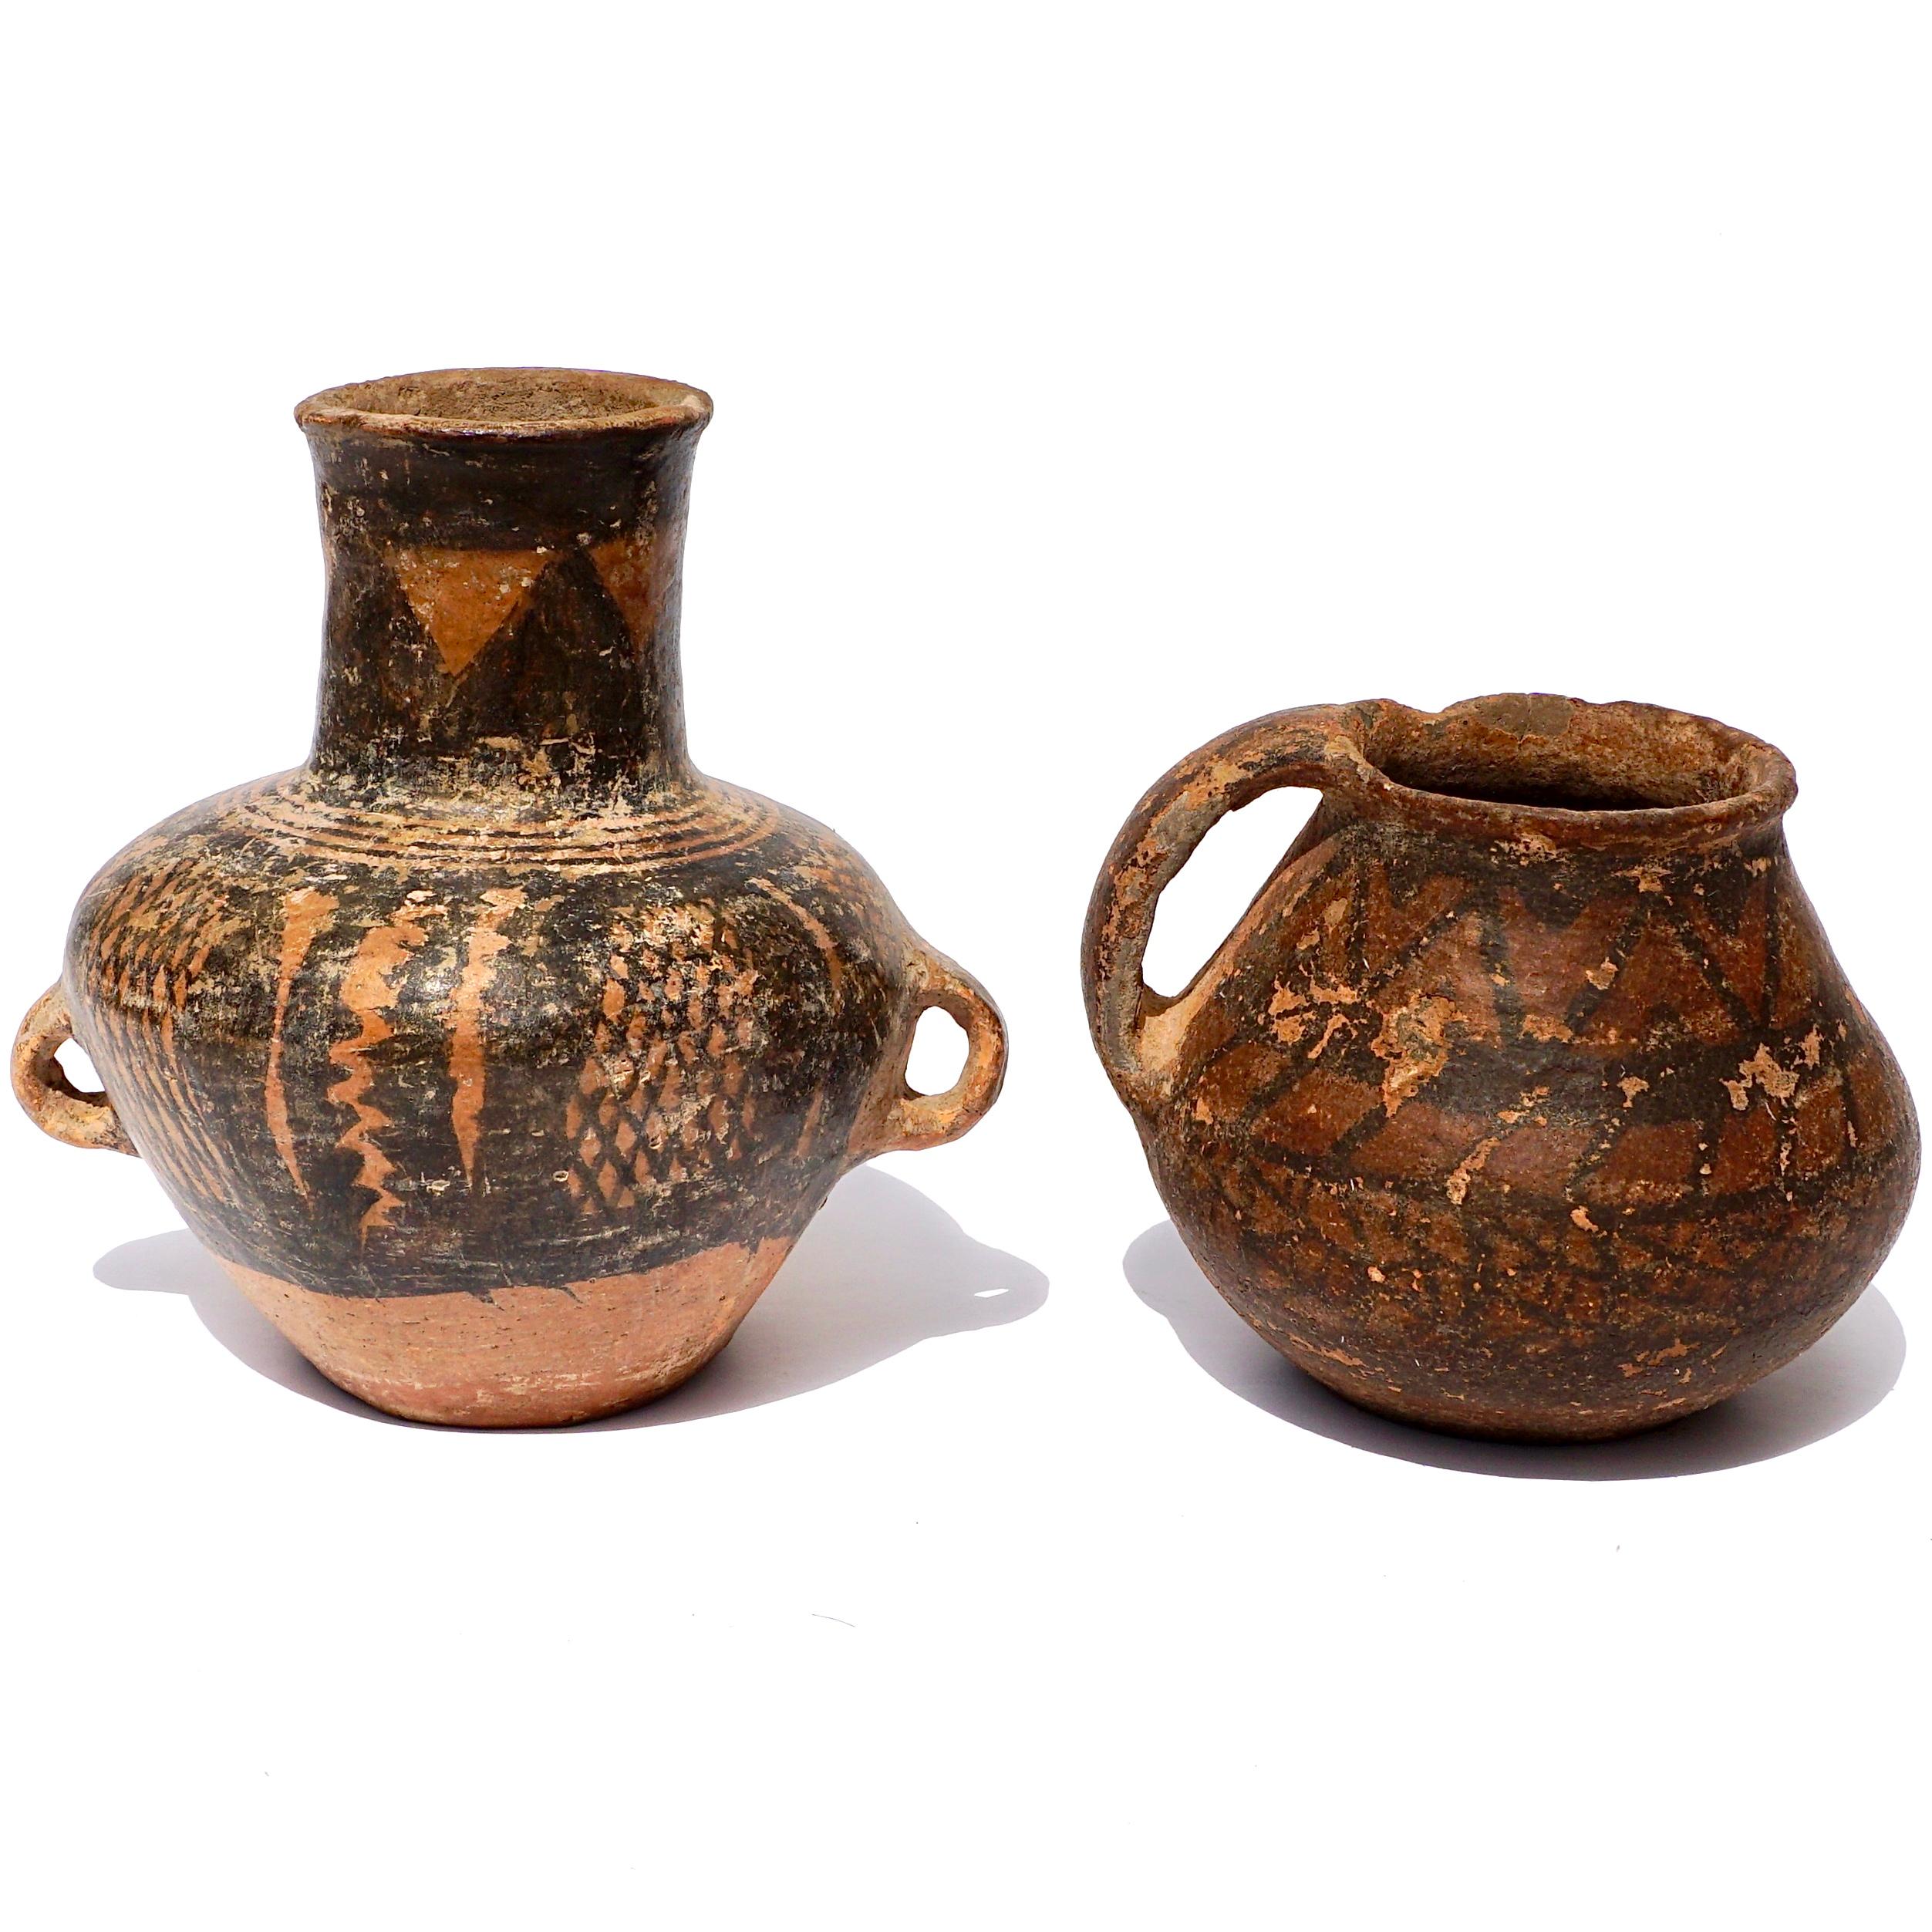 Folk Art Chinese Neolithic Pottery Vases circa 3500 BCE